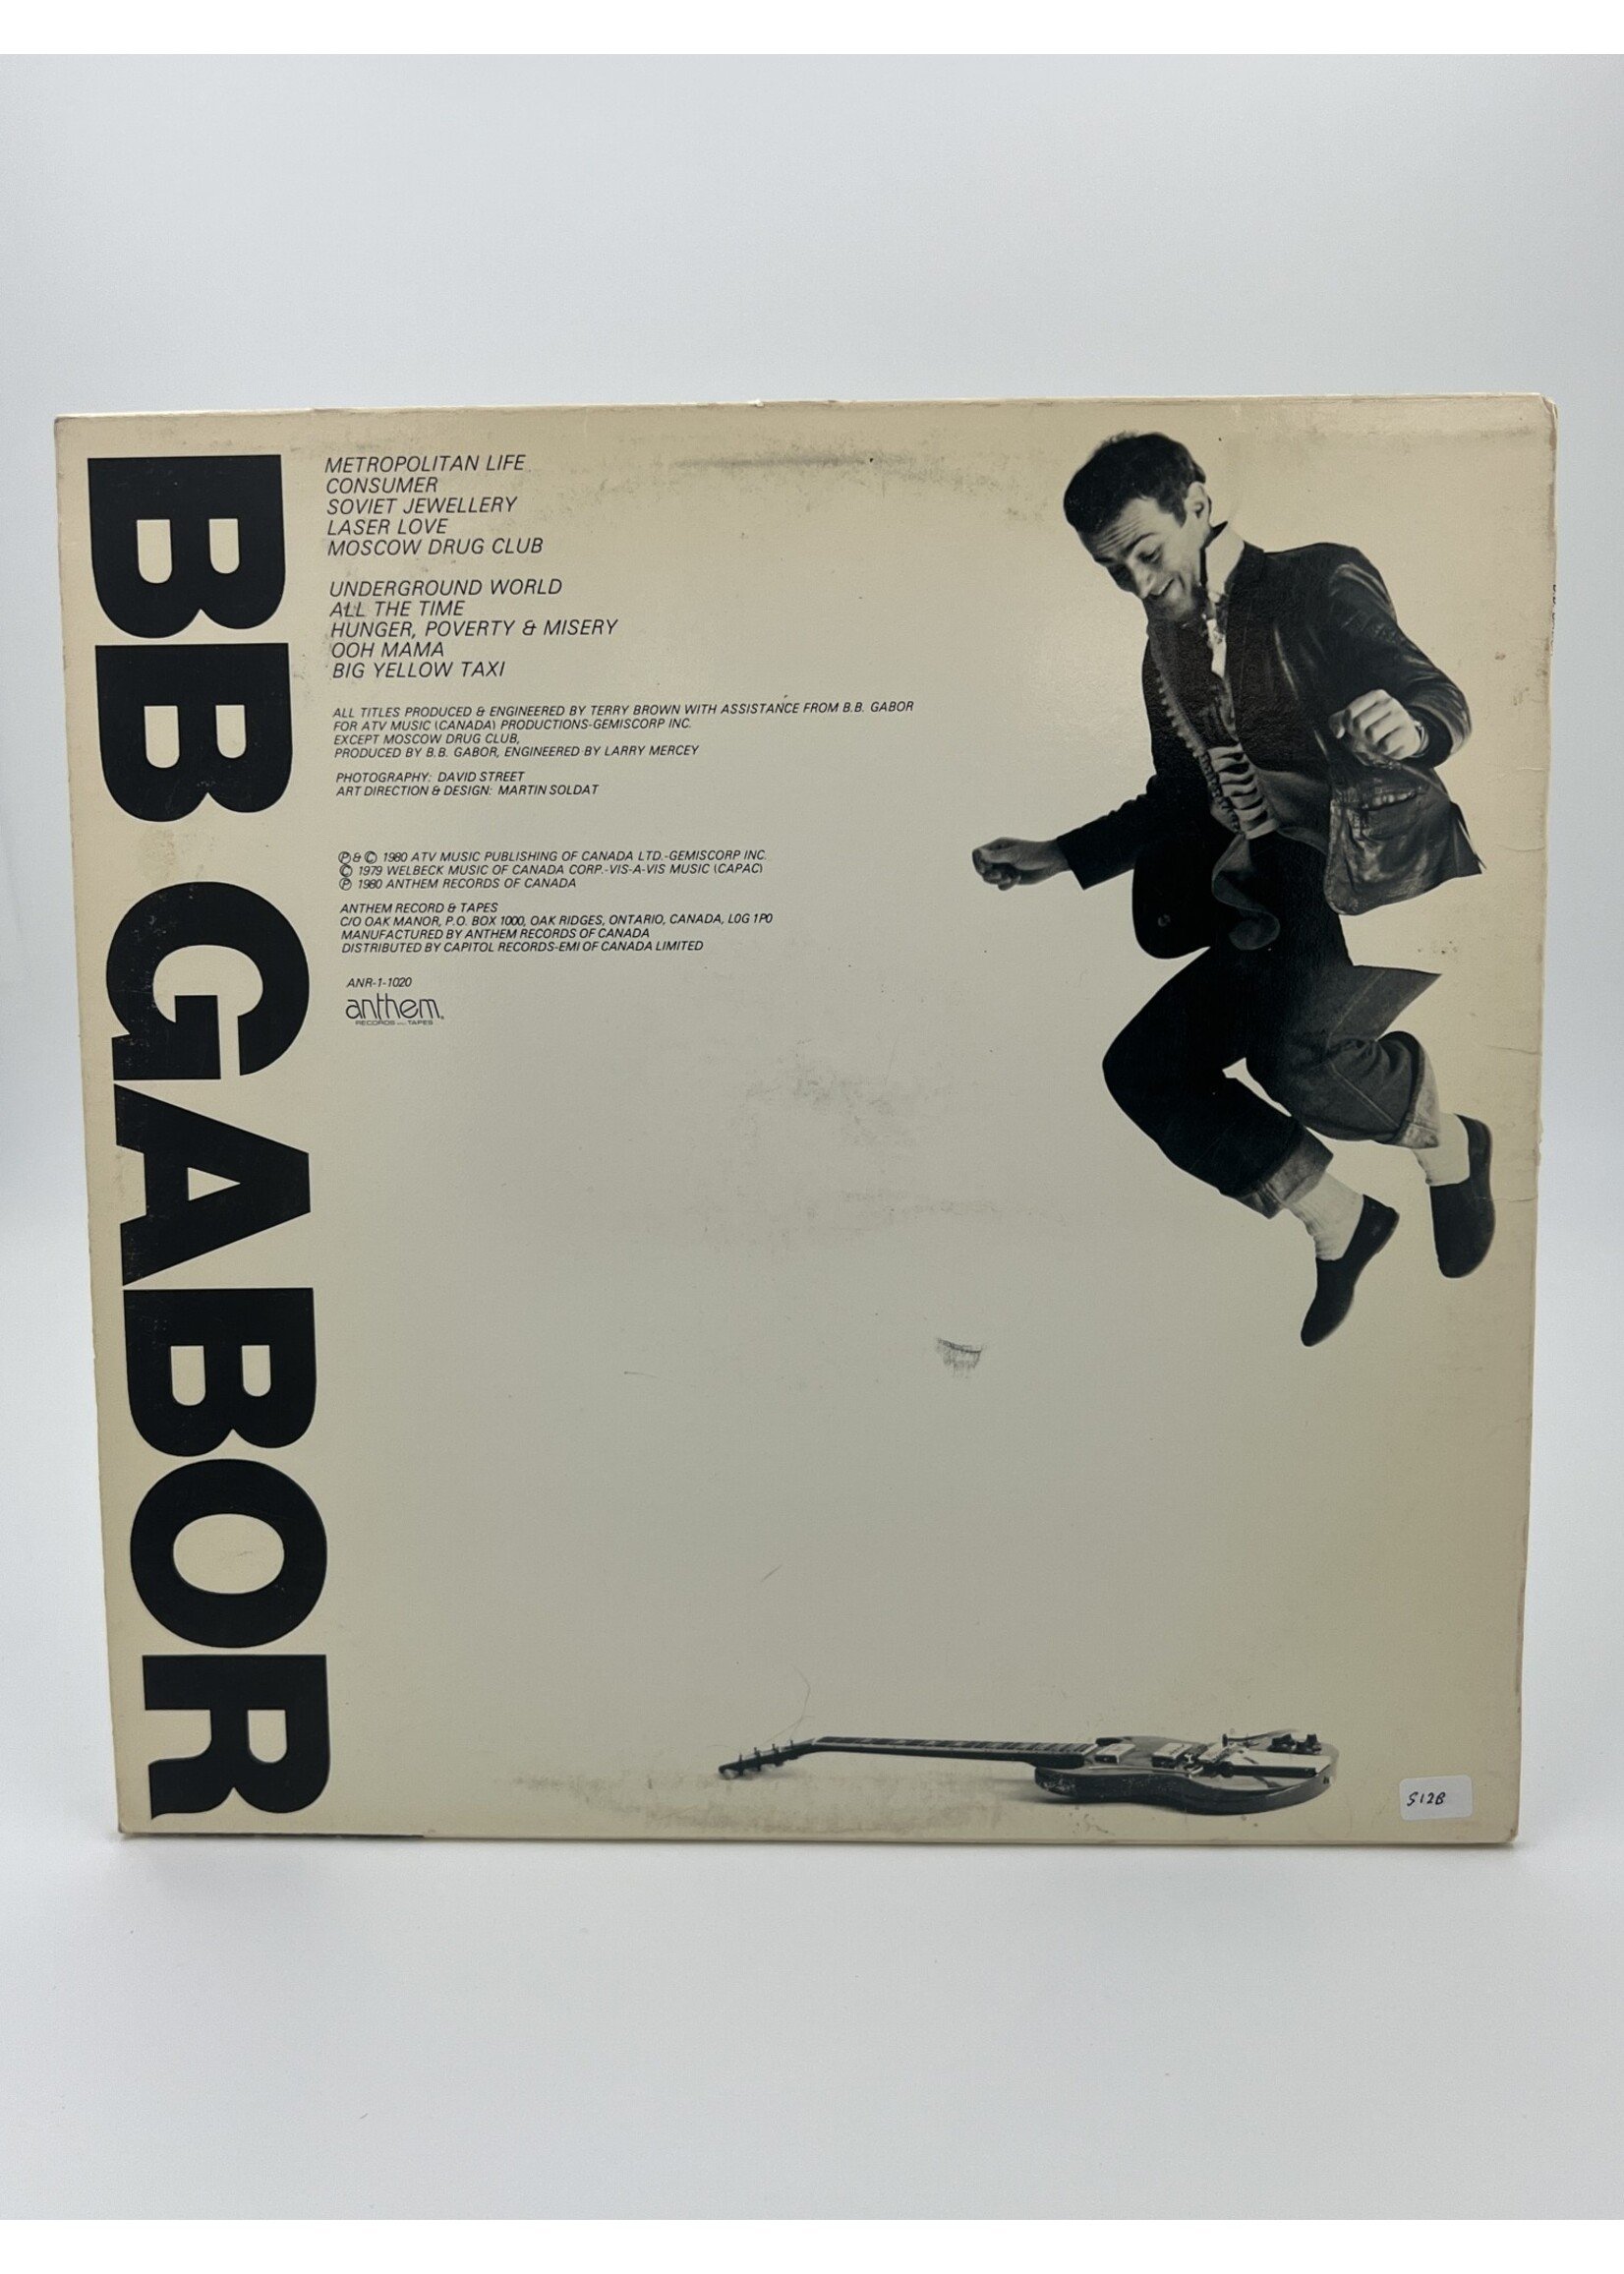 LP   BB Gabor Self Titled LP Record